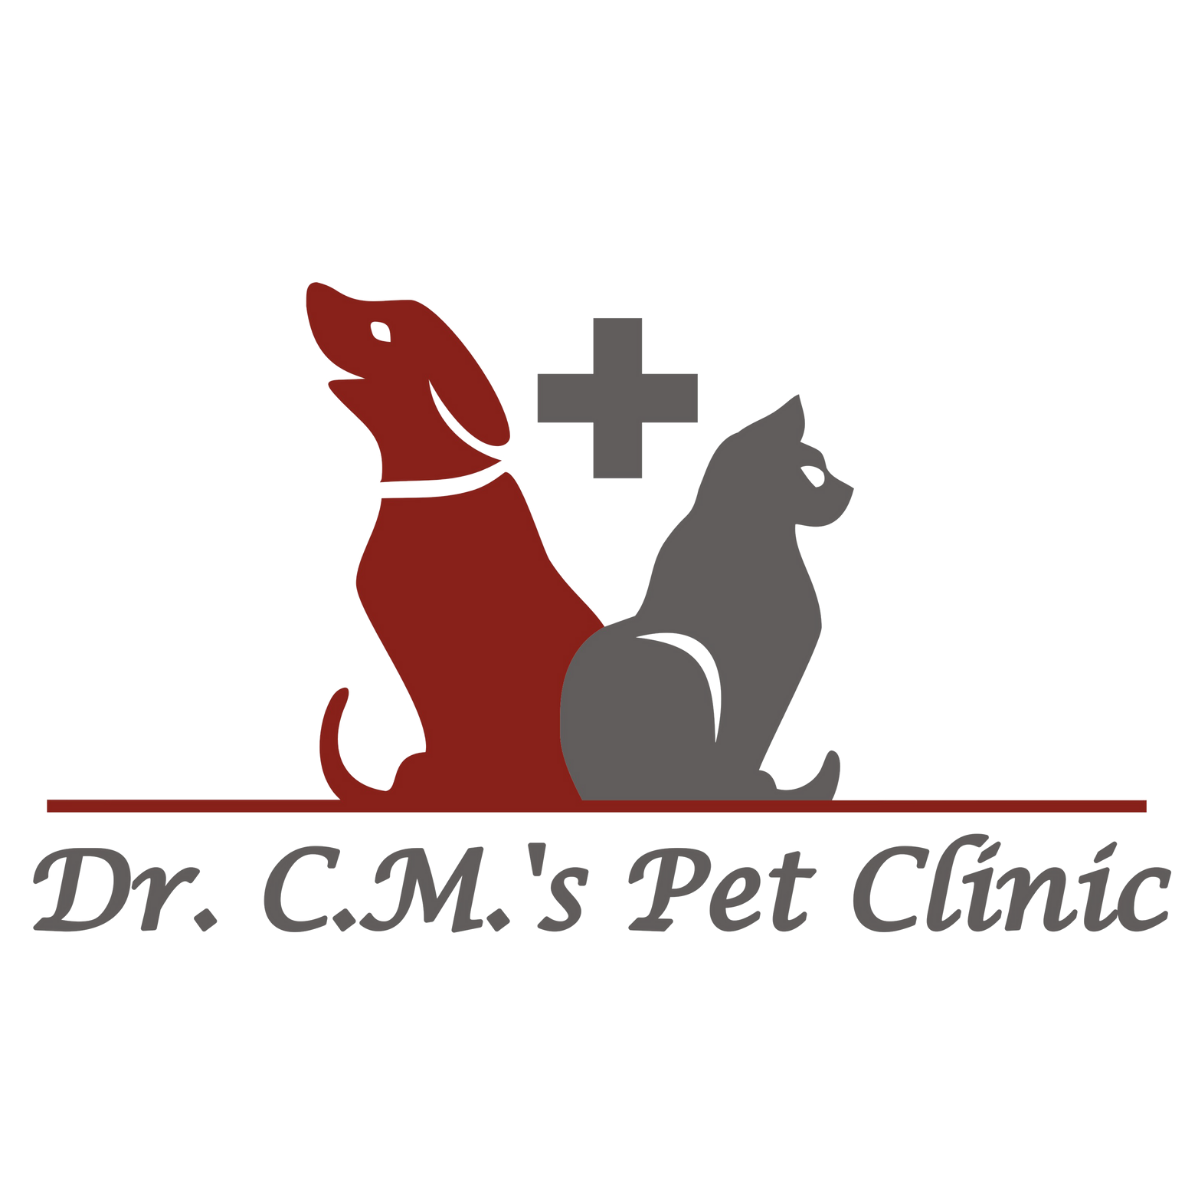 Dr.C.M.'s Pet Clinic|Healthcare|Medical Services